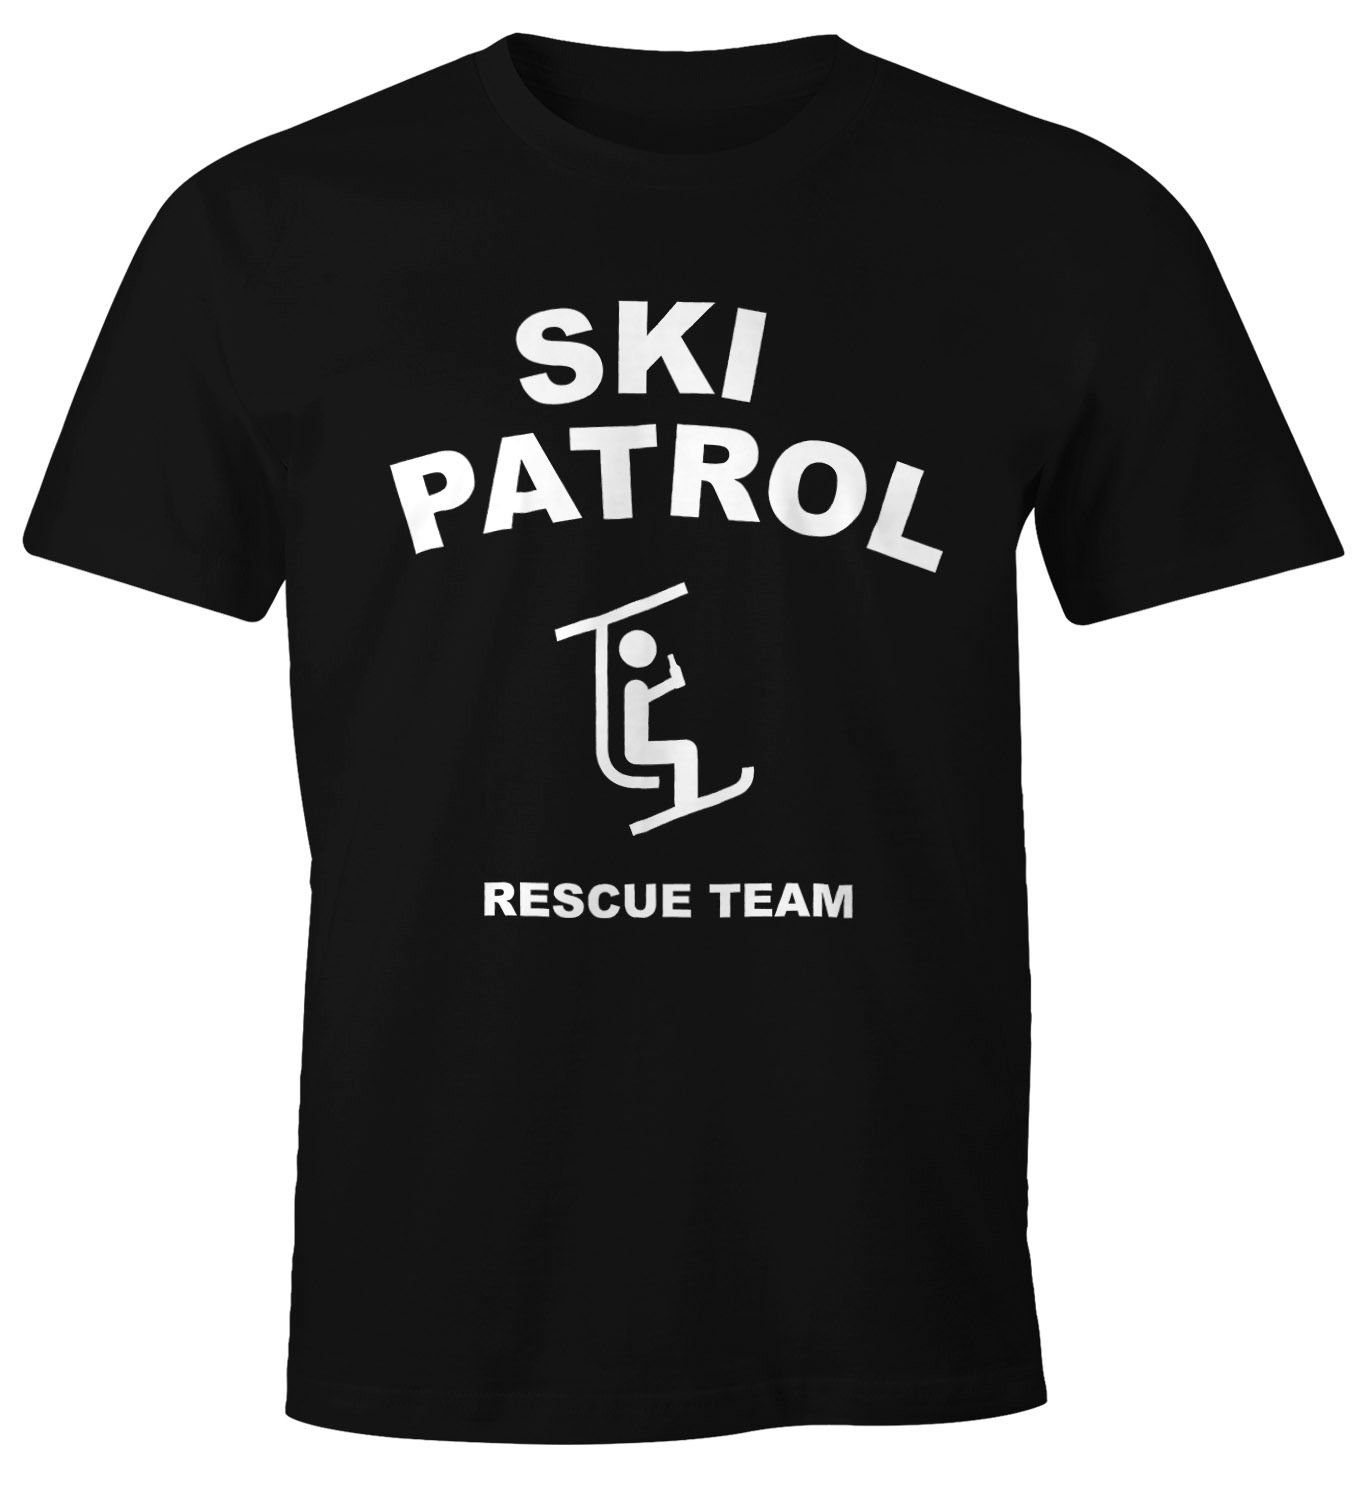 Moonworks® Bier Lift Print-Shirt Apres-Ski mit Fun-Shirt Patrol T-Shirt schwarz Print Herren MoonWorks